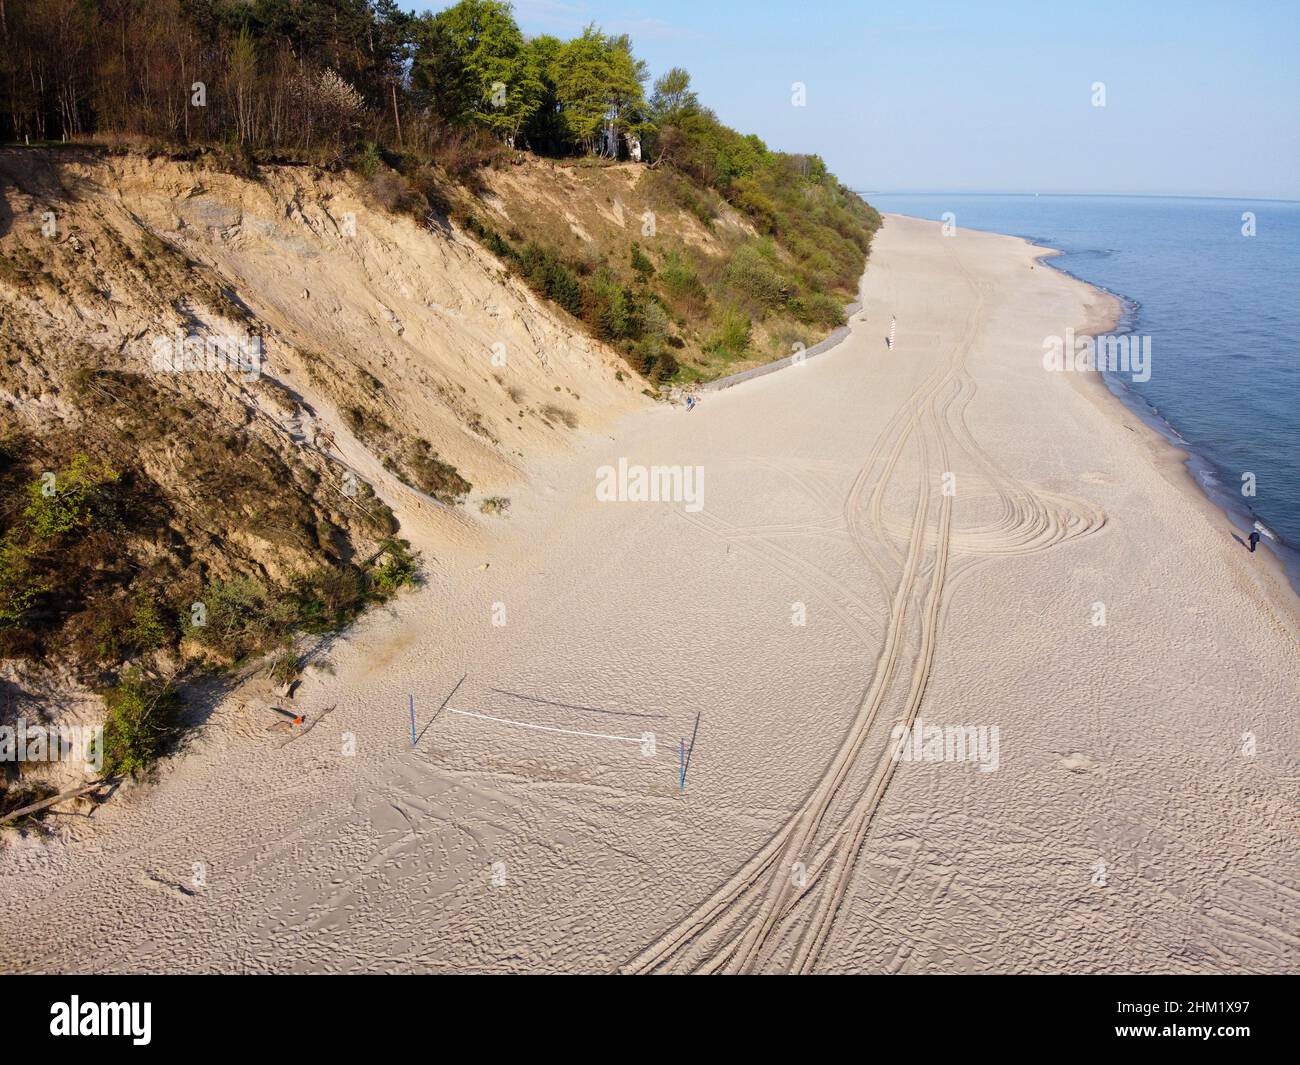 Empty beach at Jastrzebia Gora, nothern most point in Poland. View of the Baltic Sea in Jastrzebia Gora Stock Photo